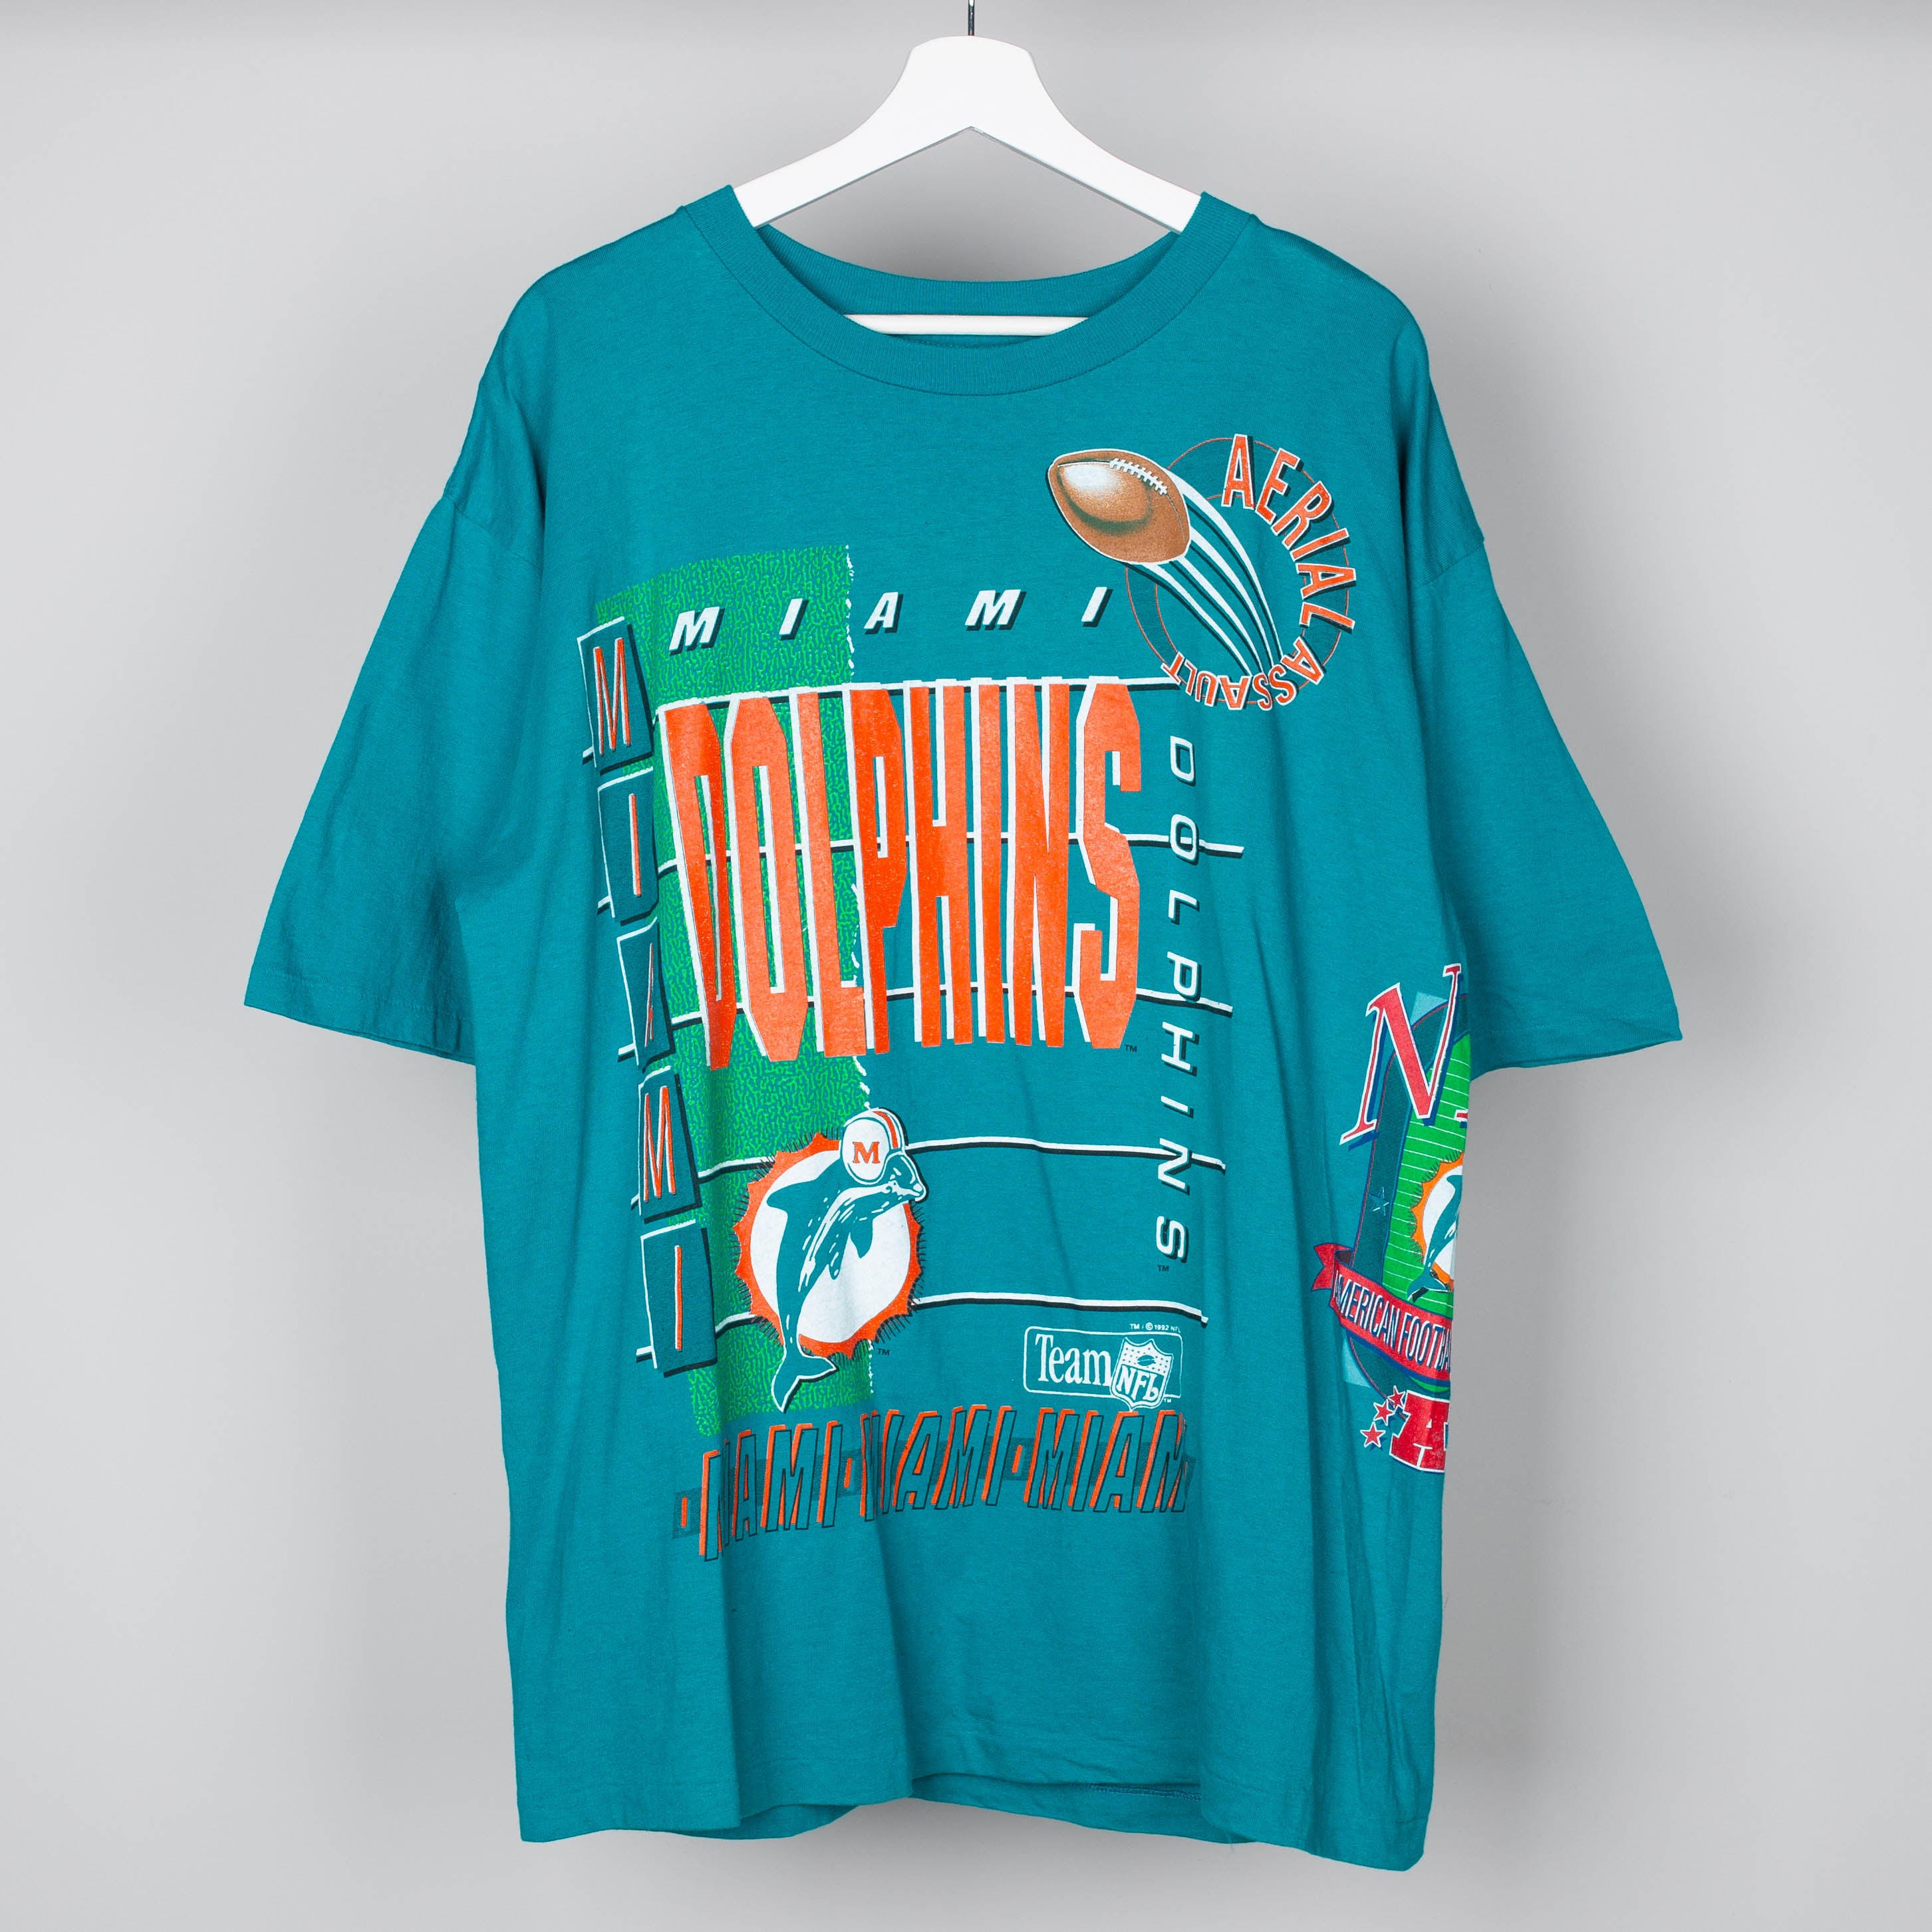 1992 Miami Dolphins T-Shirt Size XL